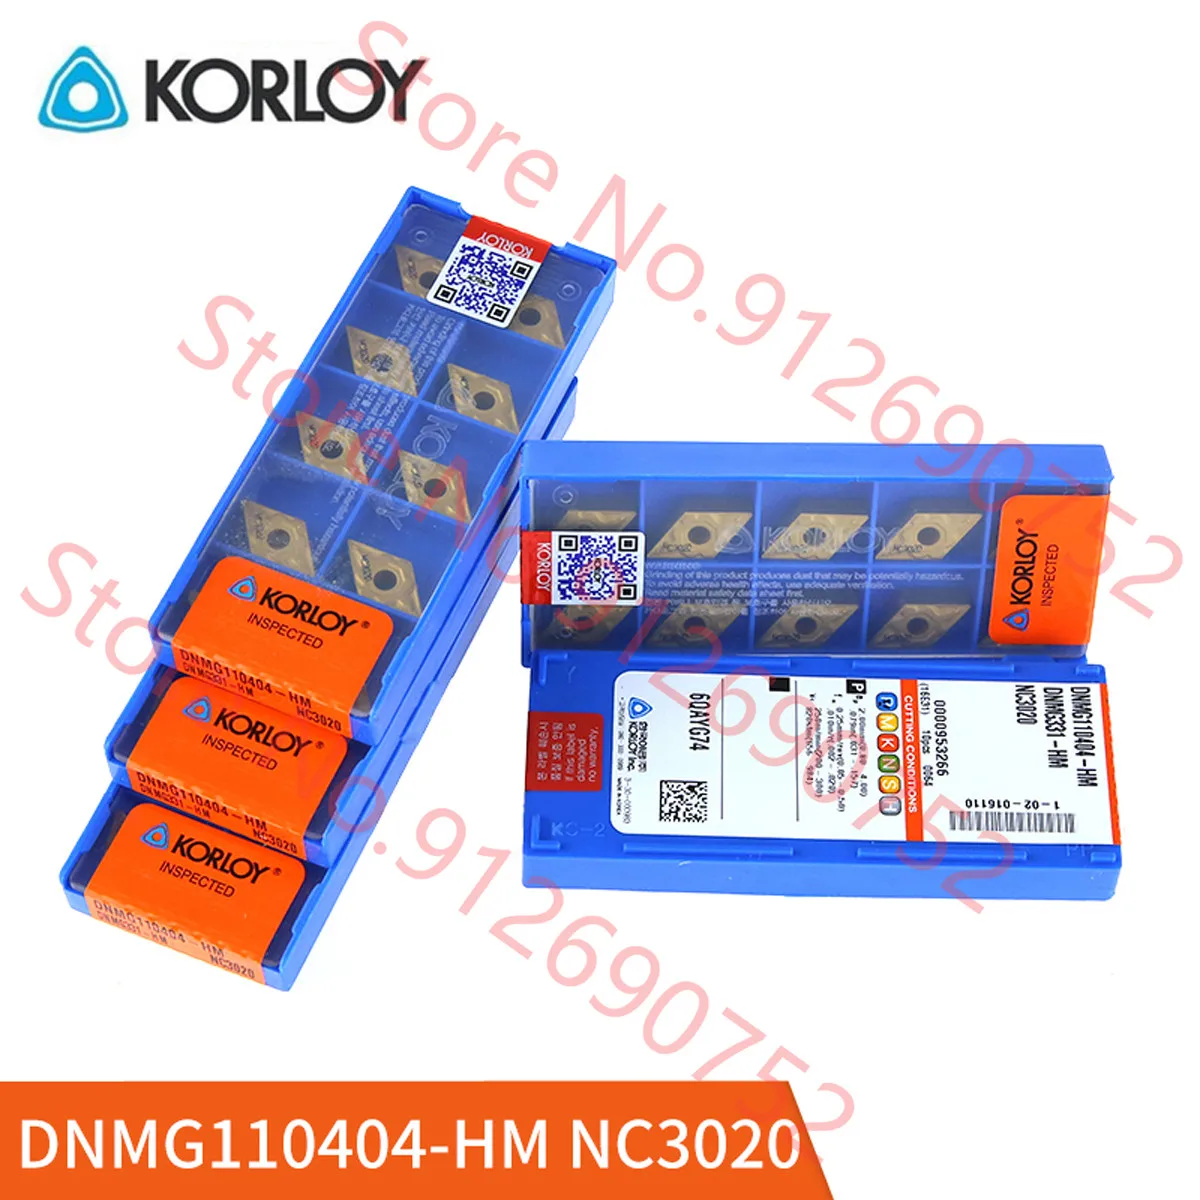 

DNMG110404-HM/DNMG110408-HM NC3020 NC3030 NC3120 PC9030 PC5300 KORLOY CARBIDE INSERT 10PCS/BOX